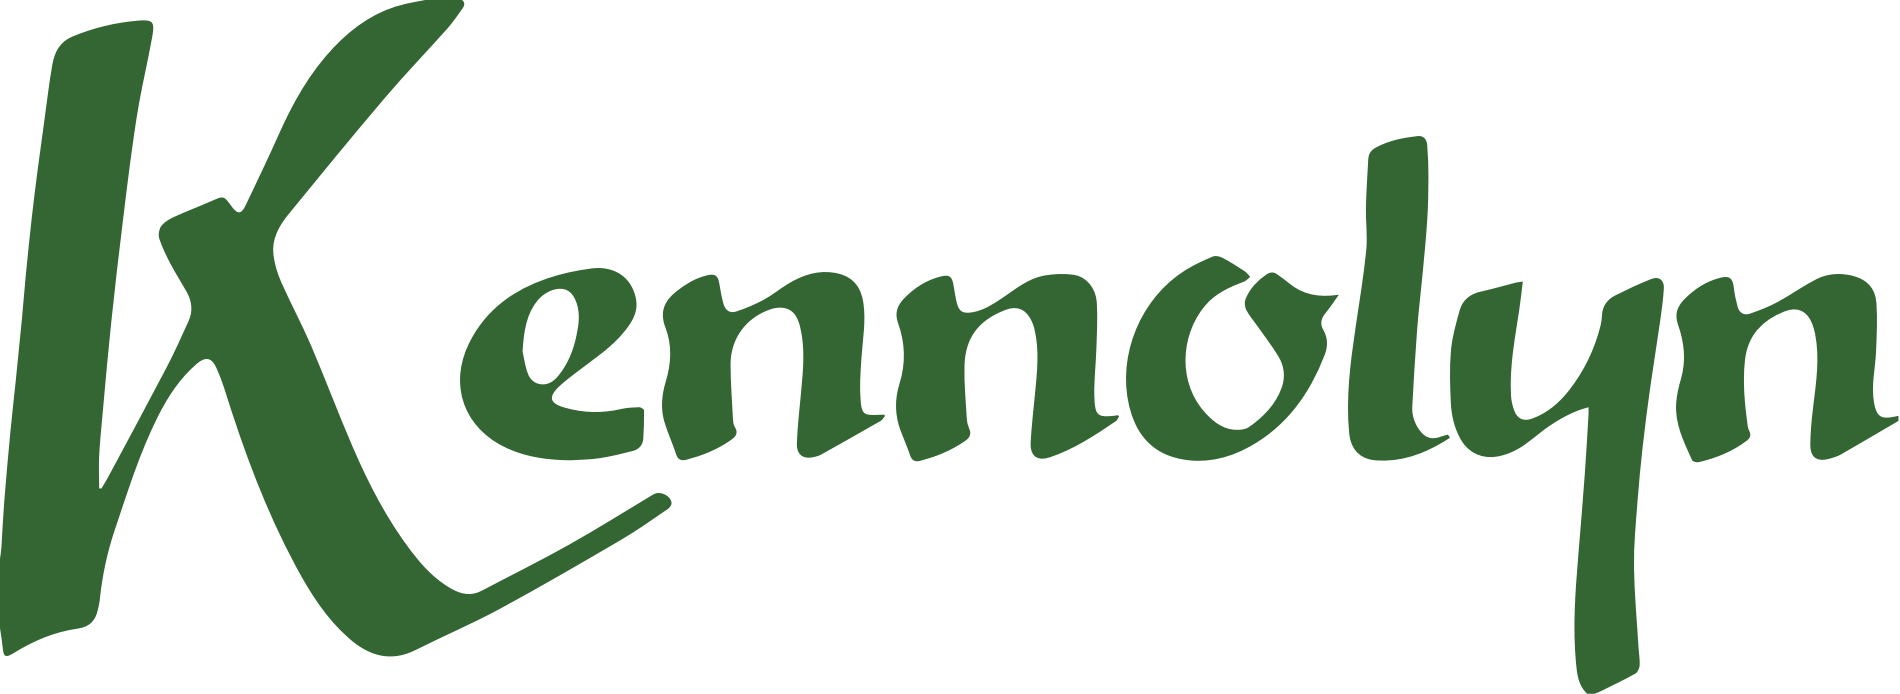 kennolyn-main-logo-retina